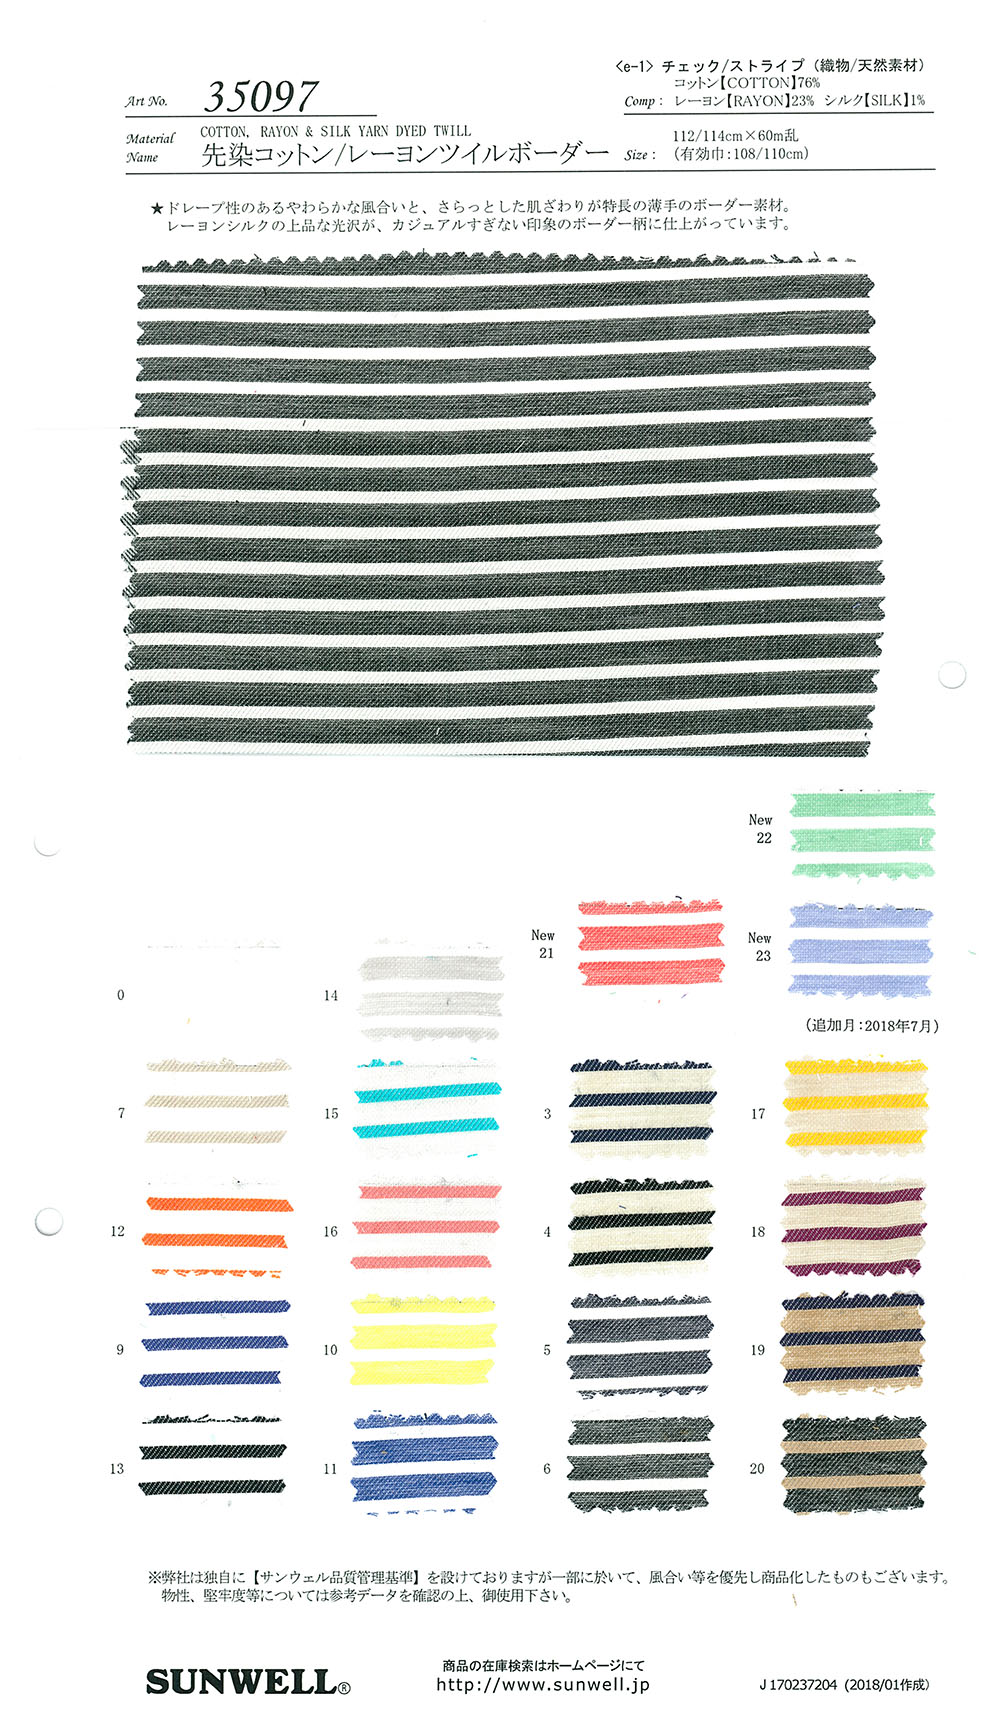 35097 Rayures Horizontales En Sergé De Coton/rayonne Teint En Fil[Fabrication De Textile] SUNWELL